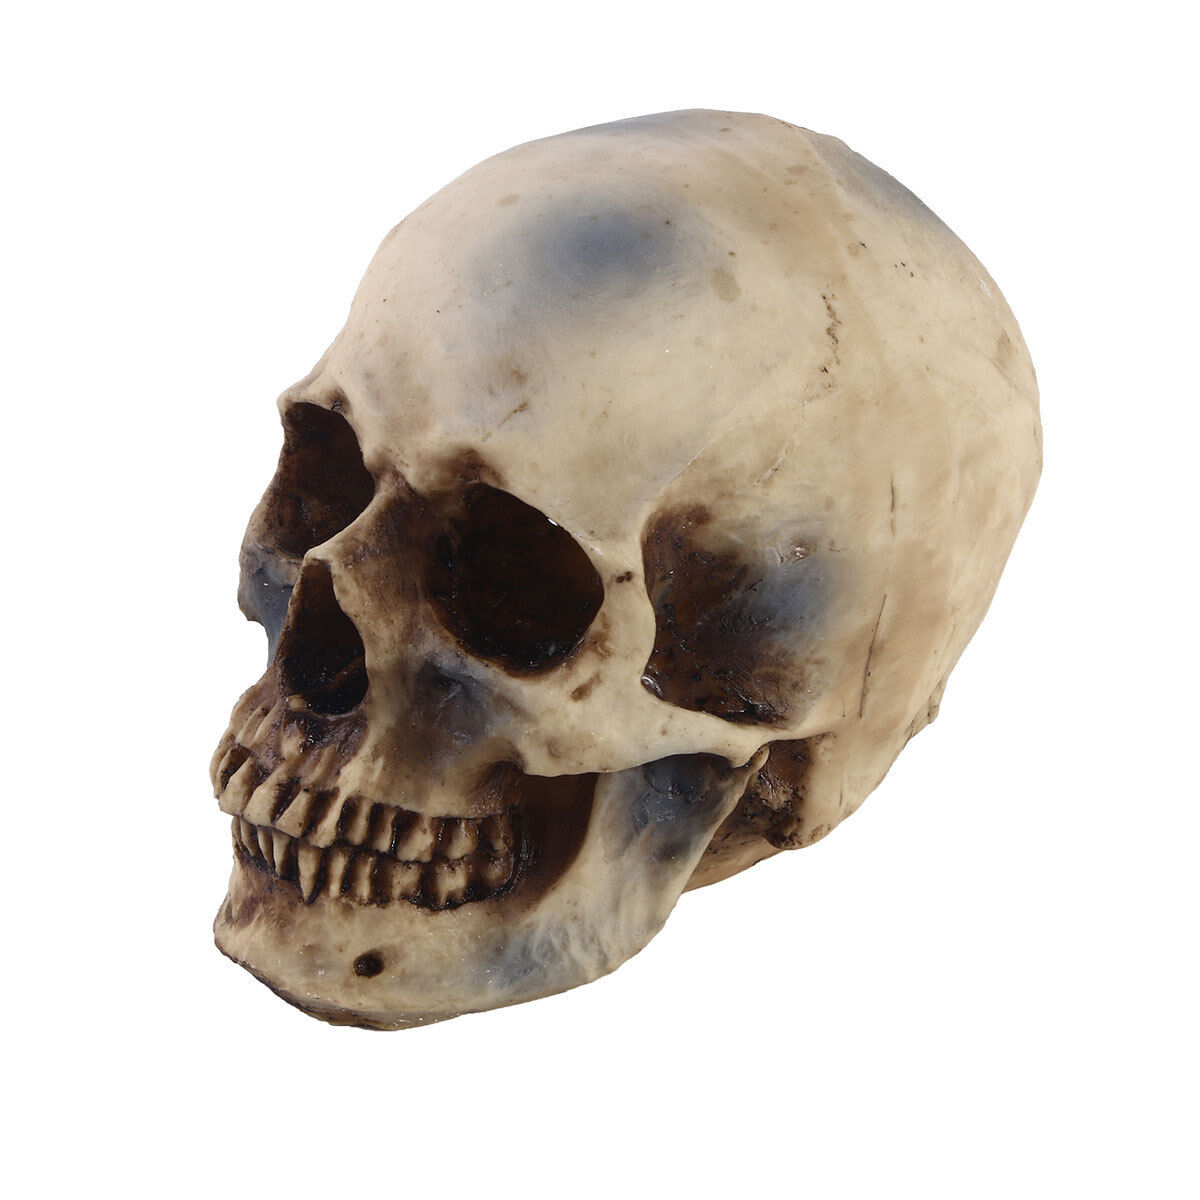 Lifesize 1:1 Human Skull Replica Resin Model Anatomical Medical Skeleton Decor